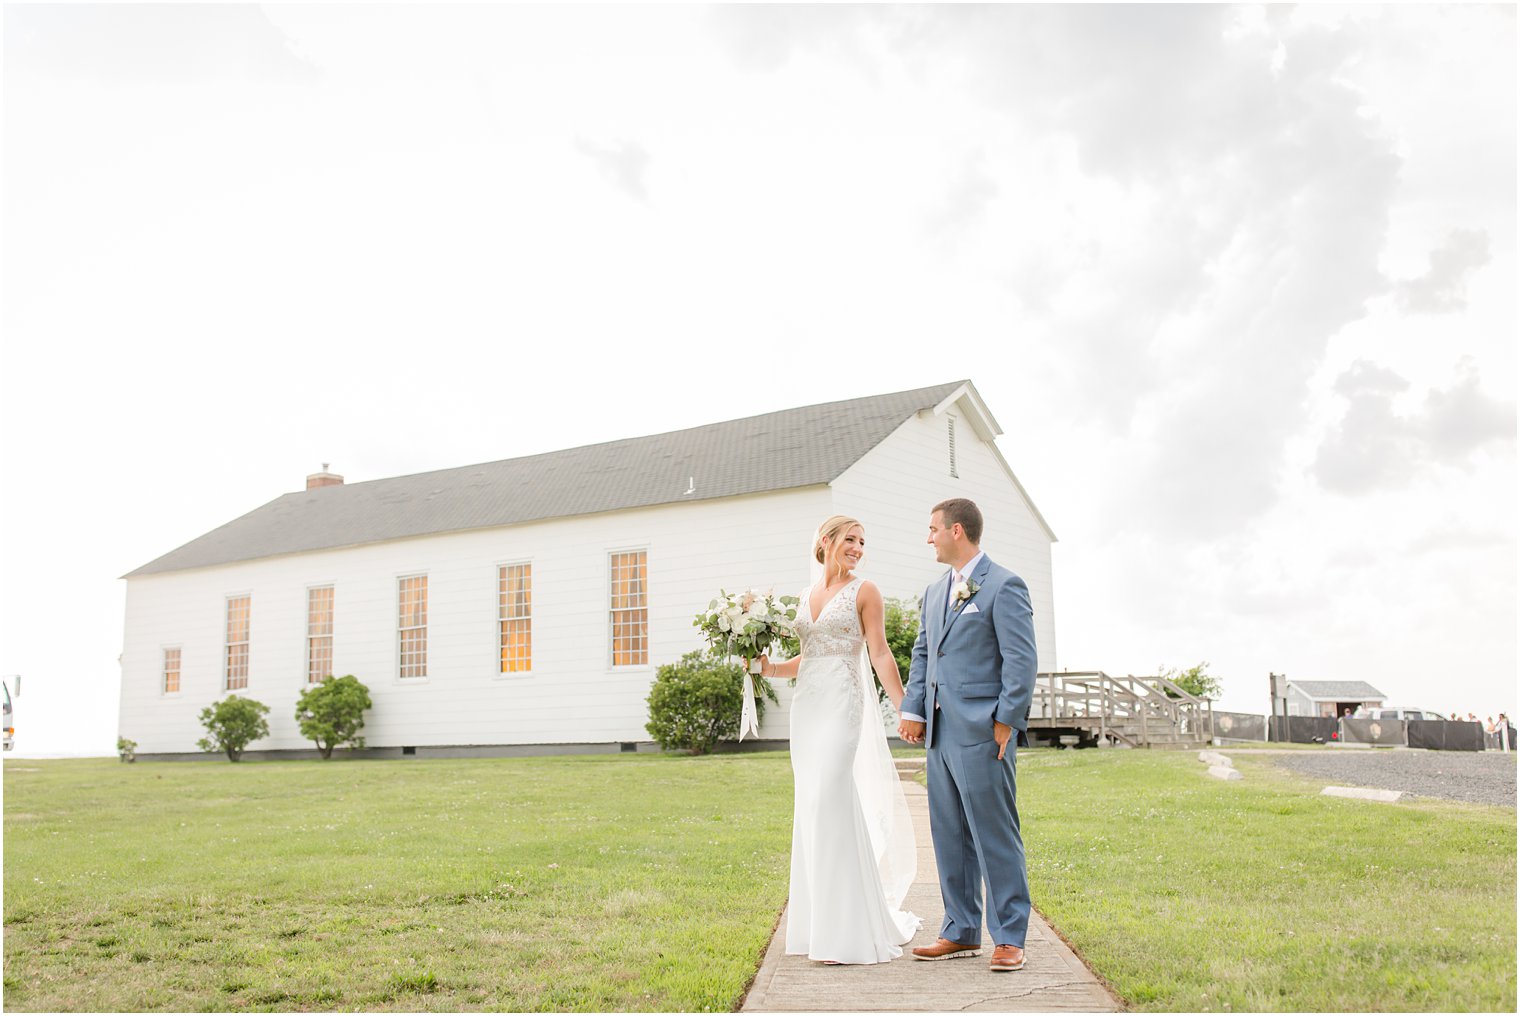 Sandy Hook Chapel wedding photographs by Idalia Photography